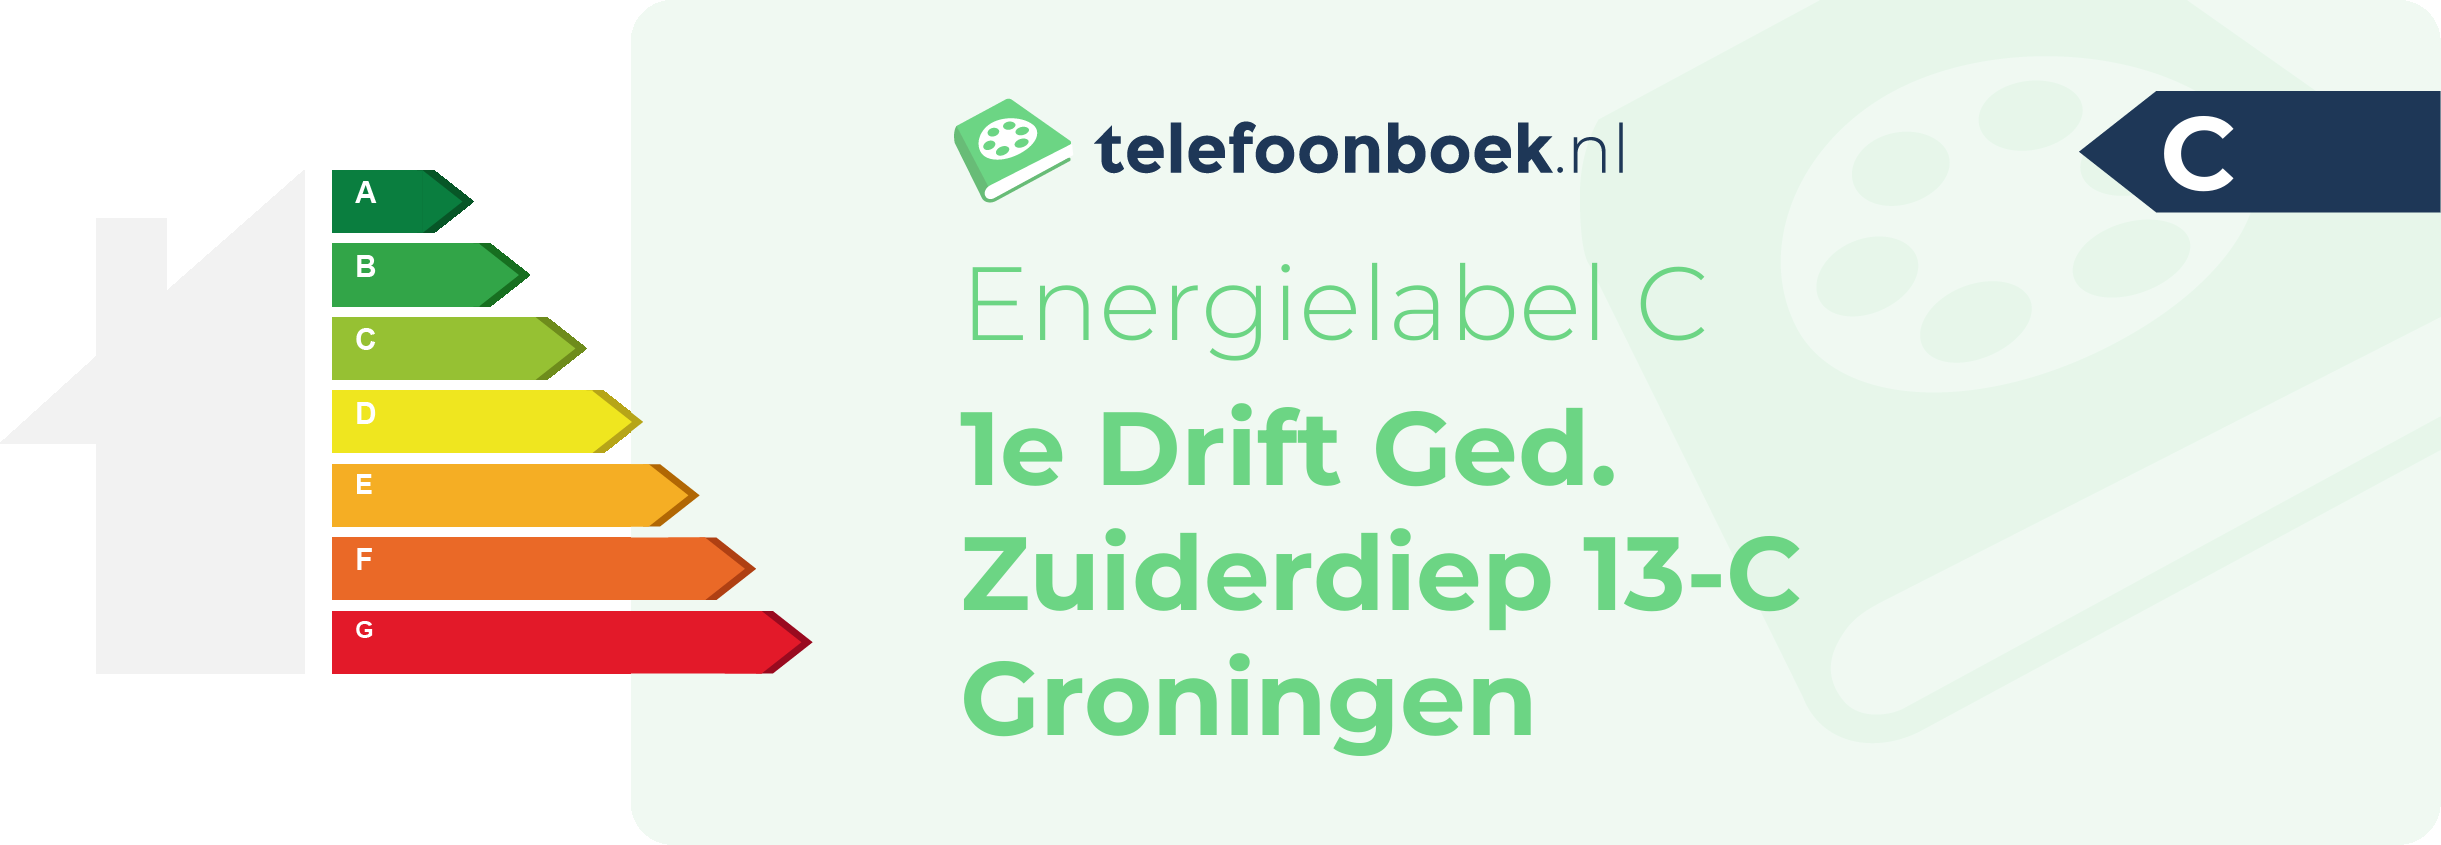 Energielabel 1e Drift Ged. Zuiderdiep 13-C Groningen